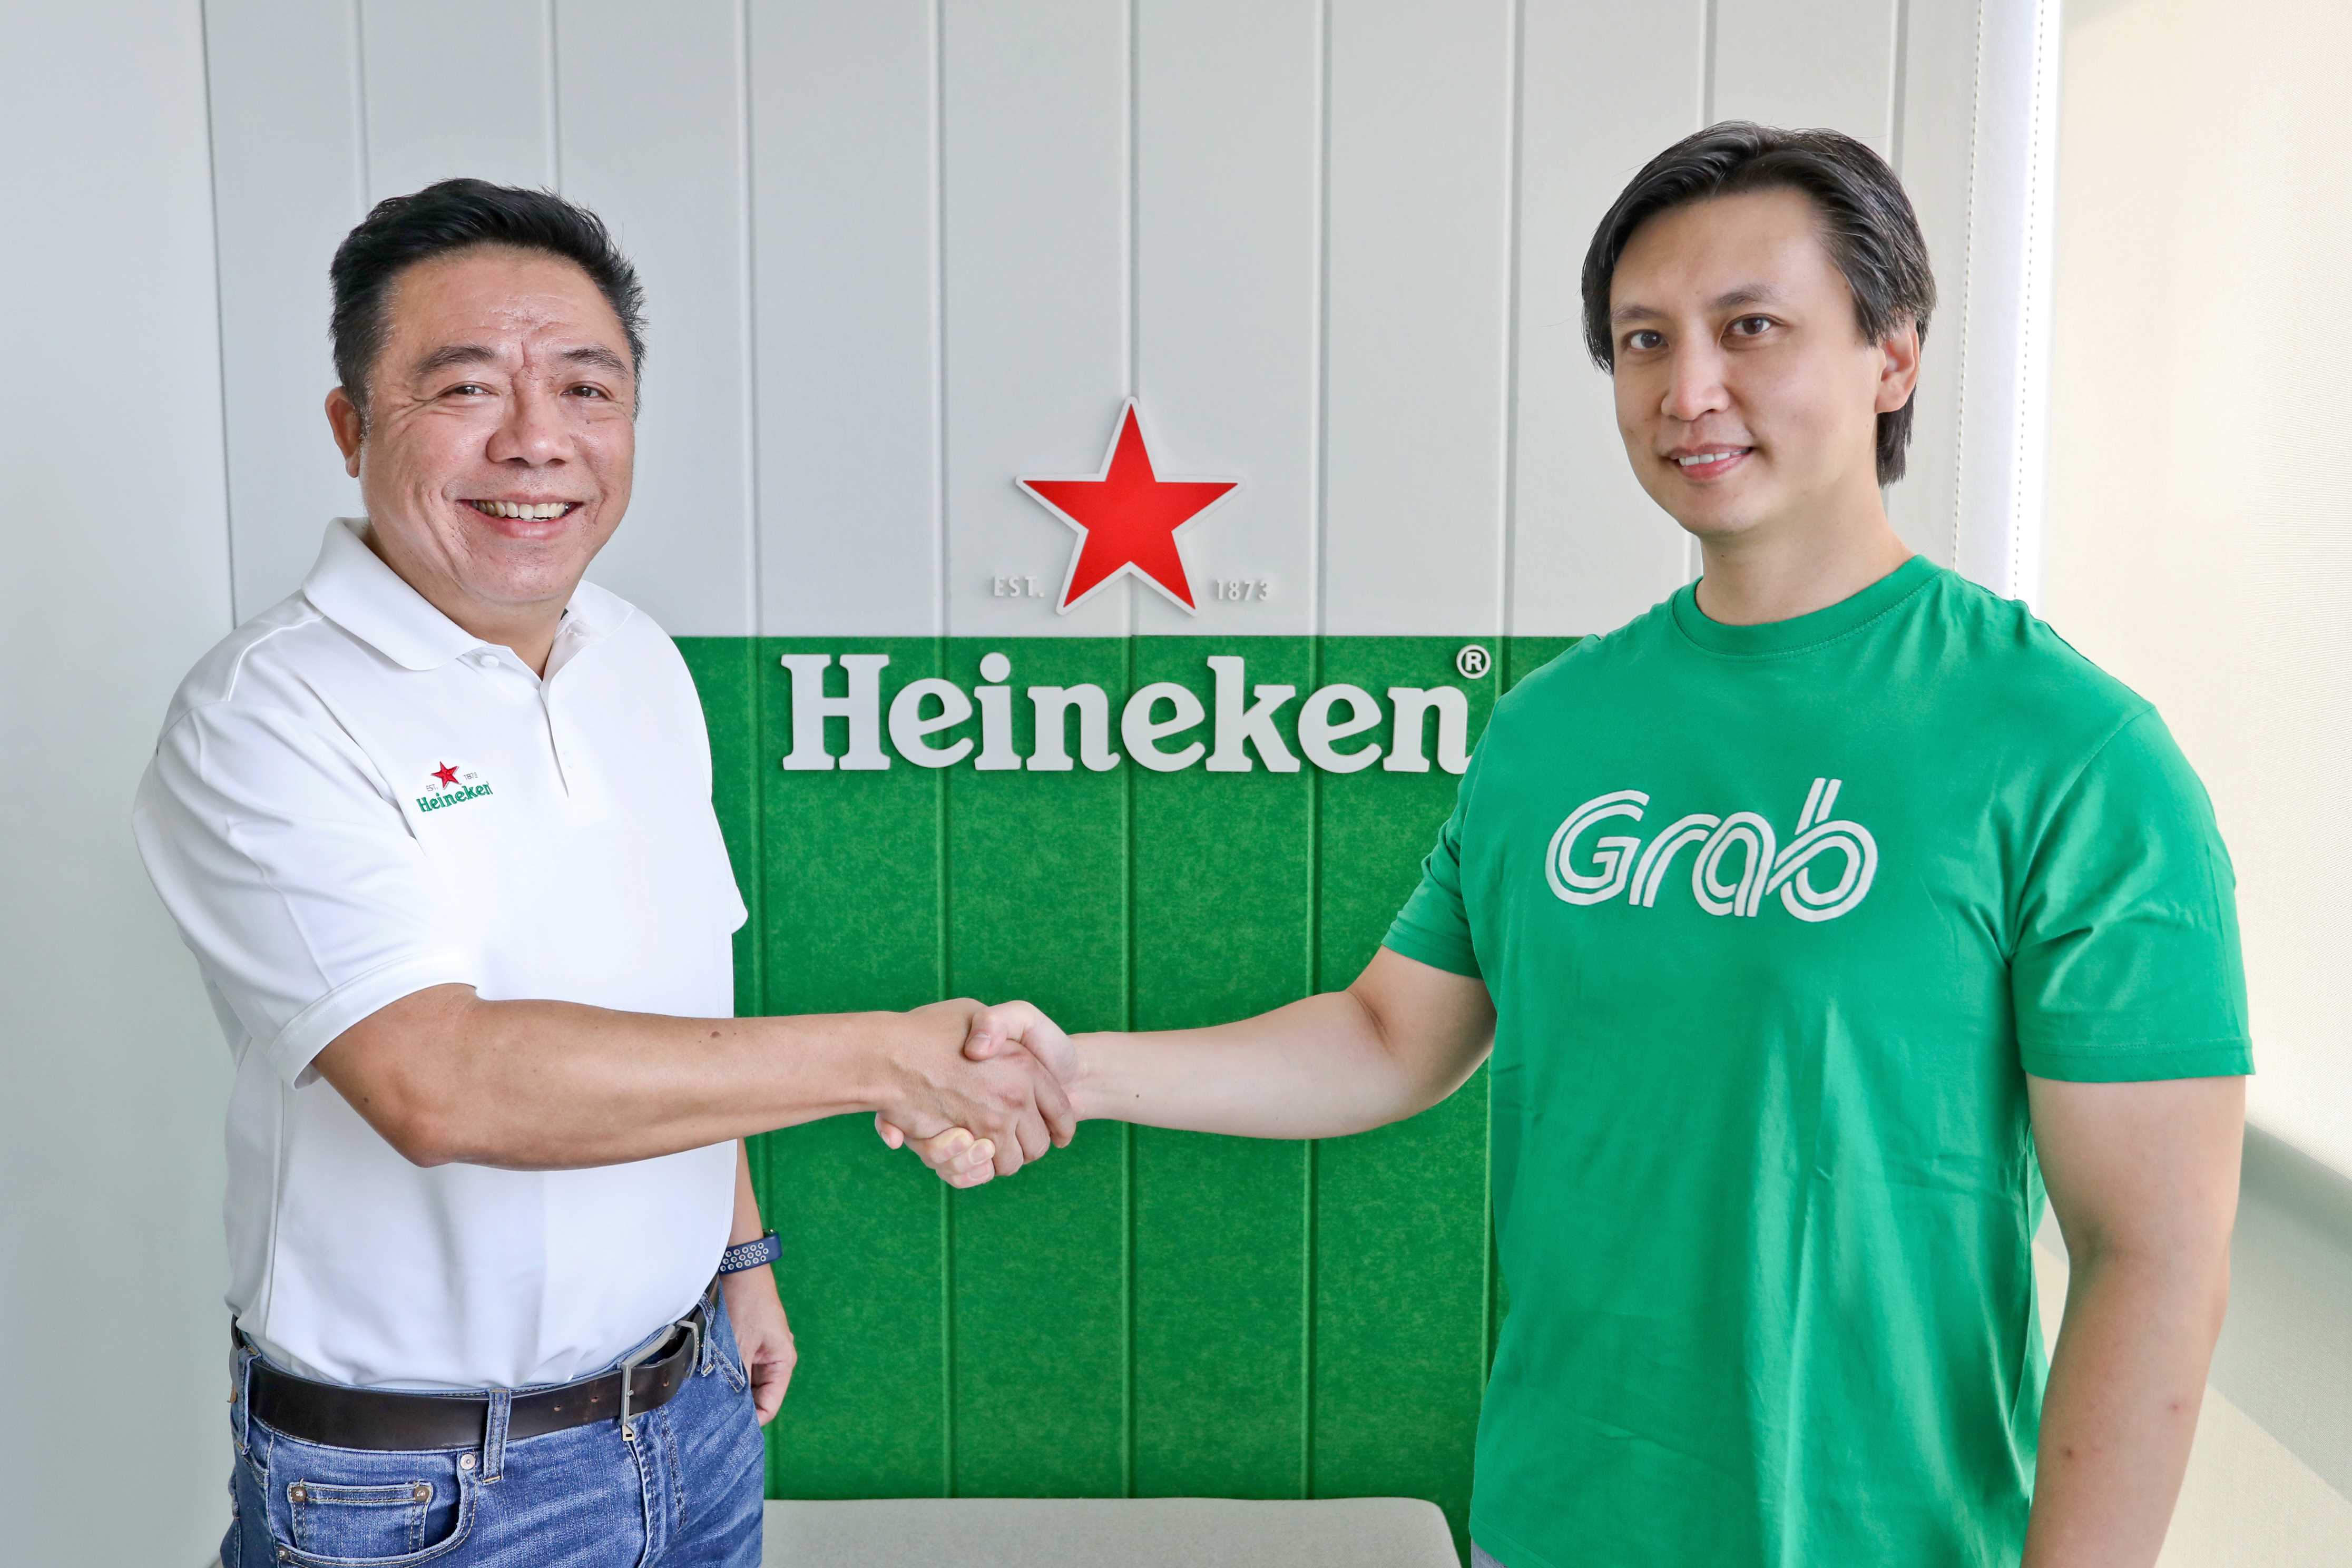 Grab and Heineken start new partnership in Southeast Asia